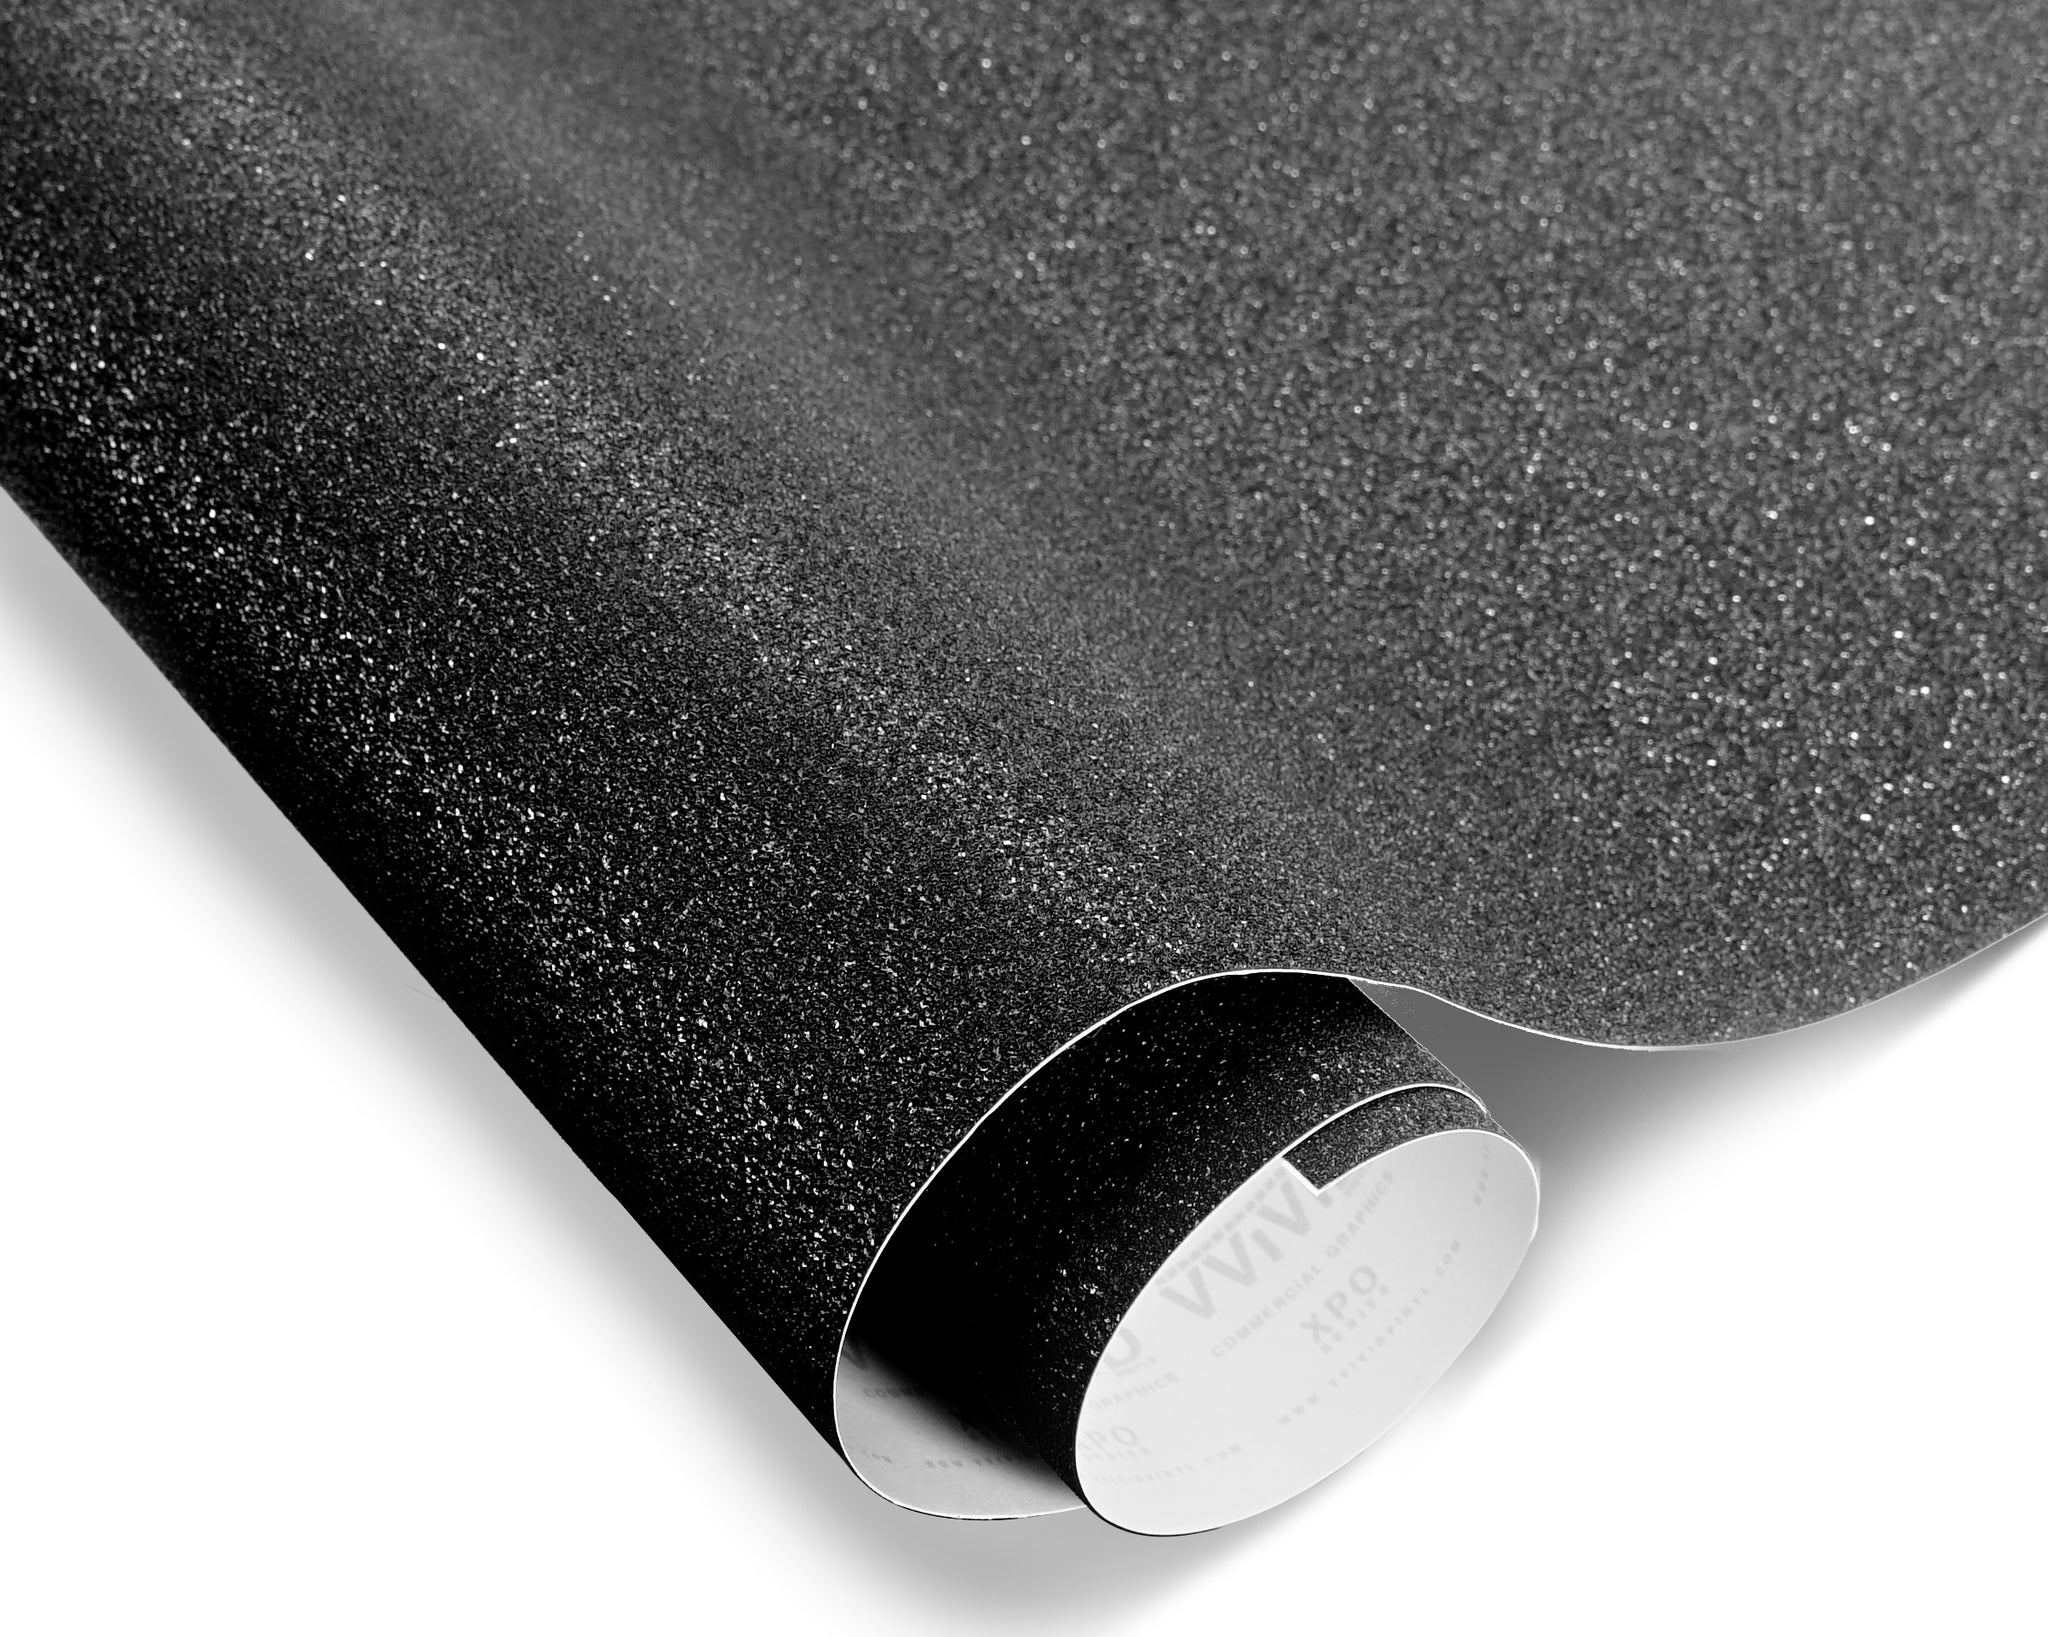 VViViD XPO White Carbon Fiber Car Wrap Vinyl Roll Air Release 3ft x 5ft  Decal